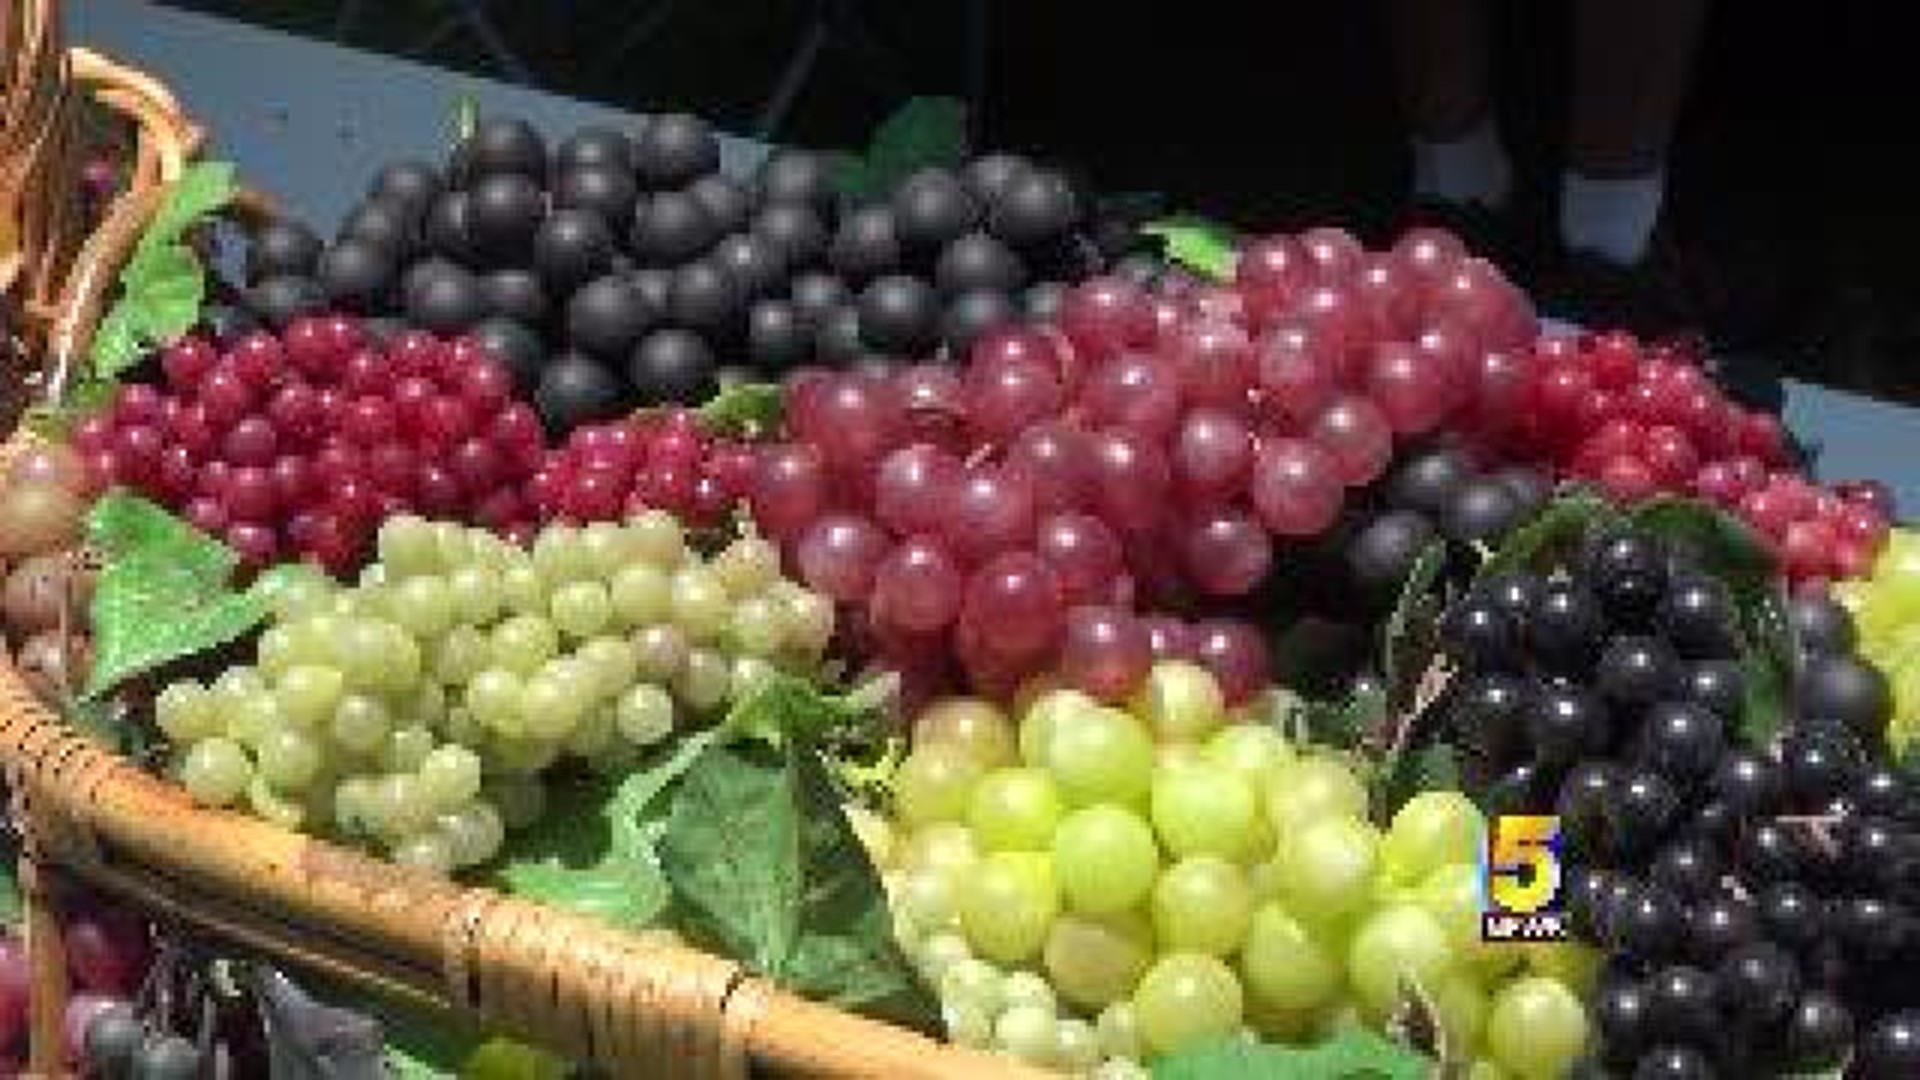 Altus Grape Festival Celebrates Tradition, Family